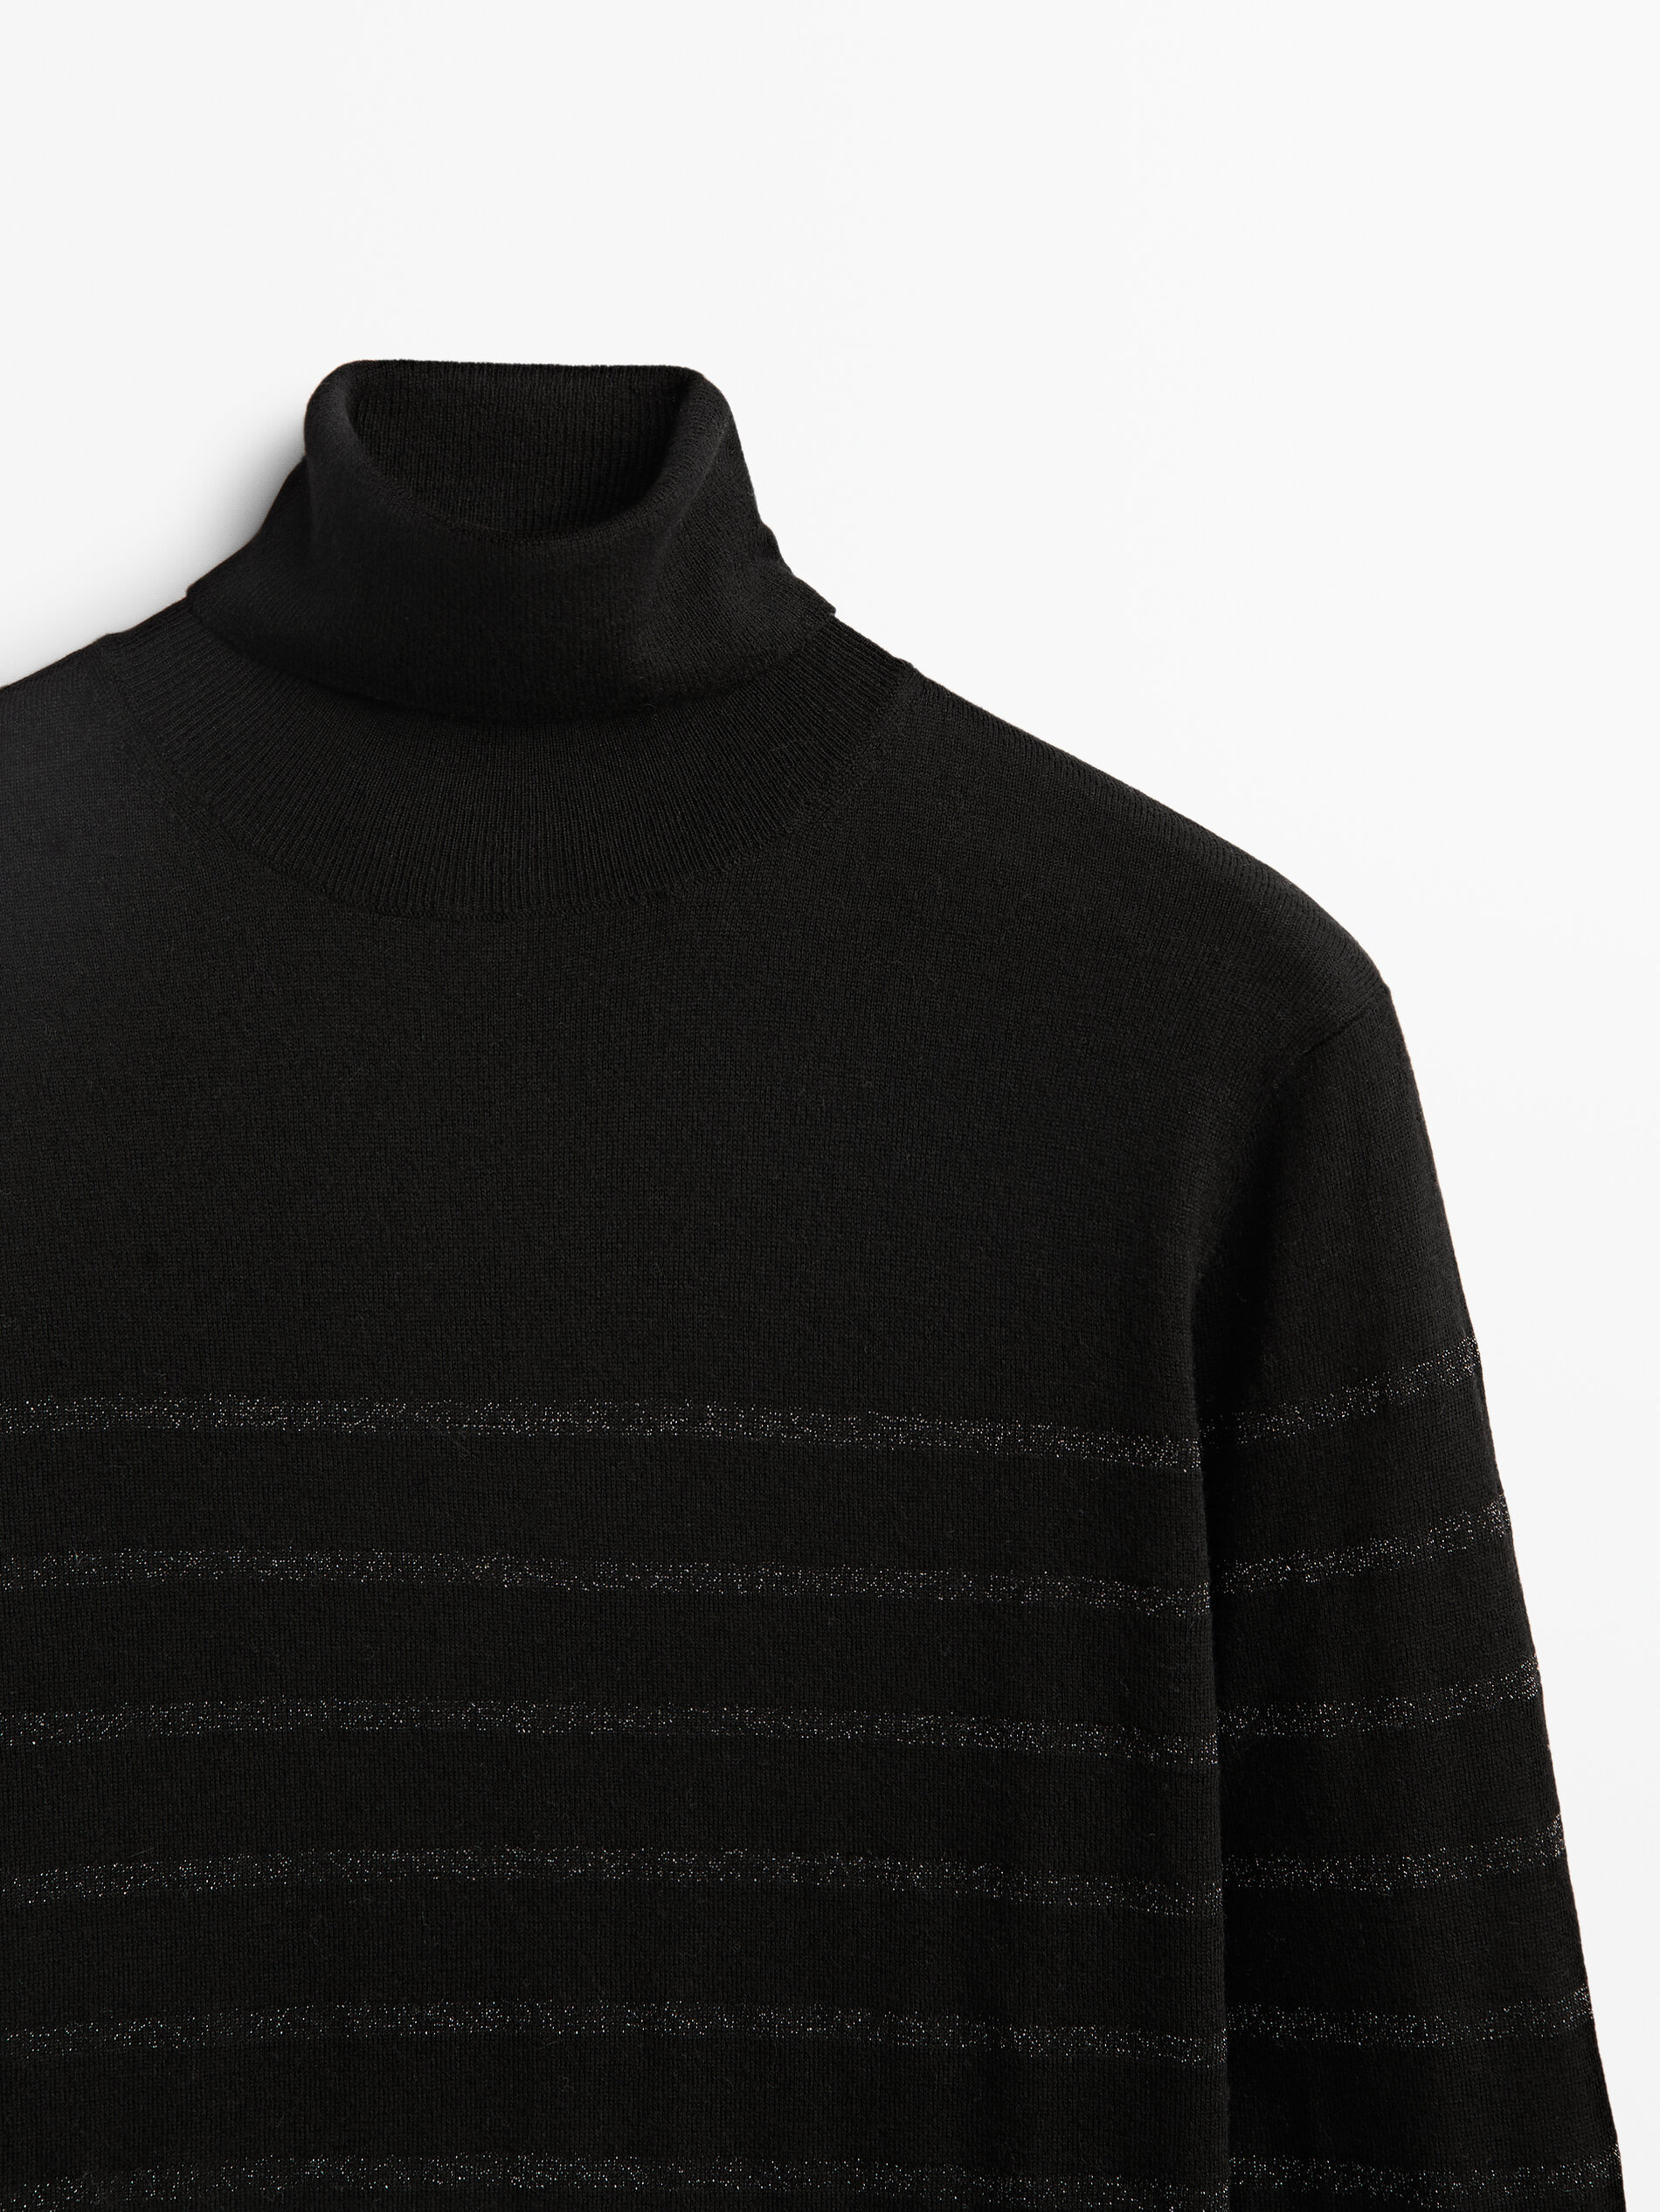 Fashion Sweaters Turtleneck Sweaters Massimo Dutti Turtleneck Sweater cream-black striped pattern casual look 